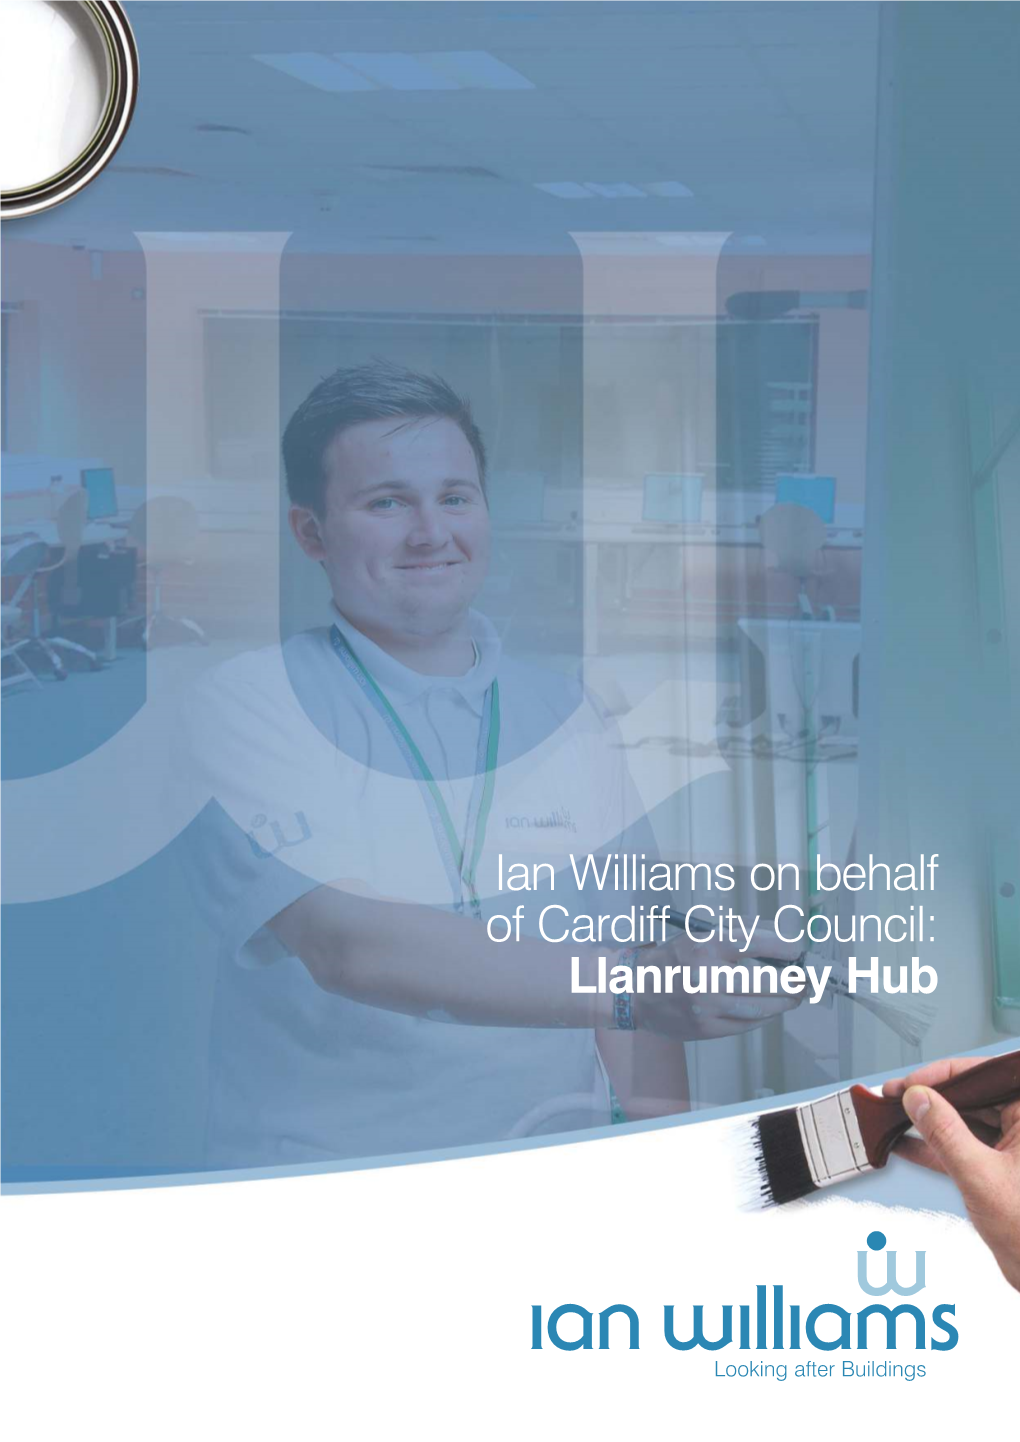 Ian Williams on Behalf of Cardiff City Council: Llanrumney Hub Project: Llanrumney Hub